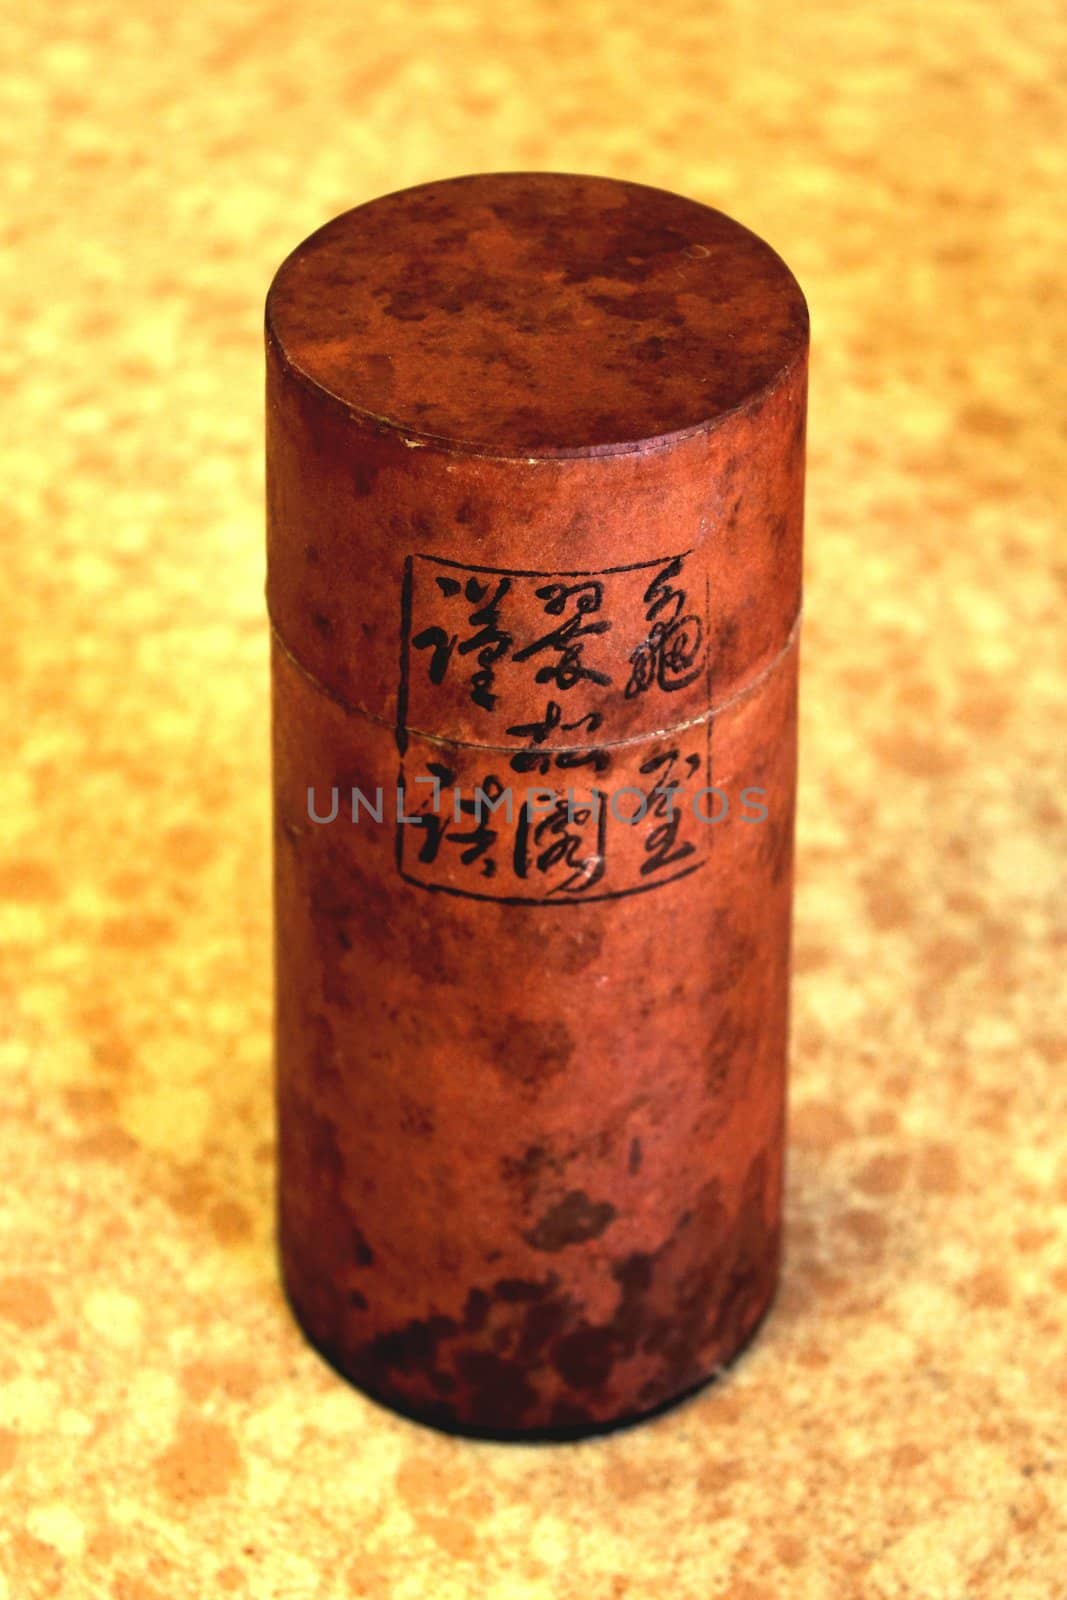 Small Japanese round cylinder herbal tea box.